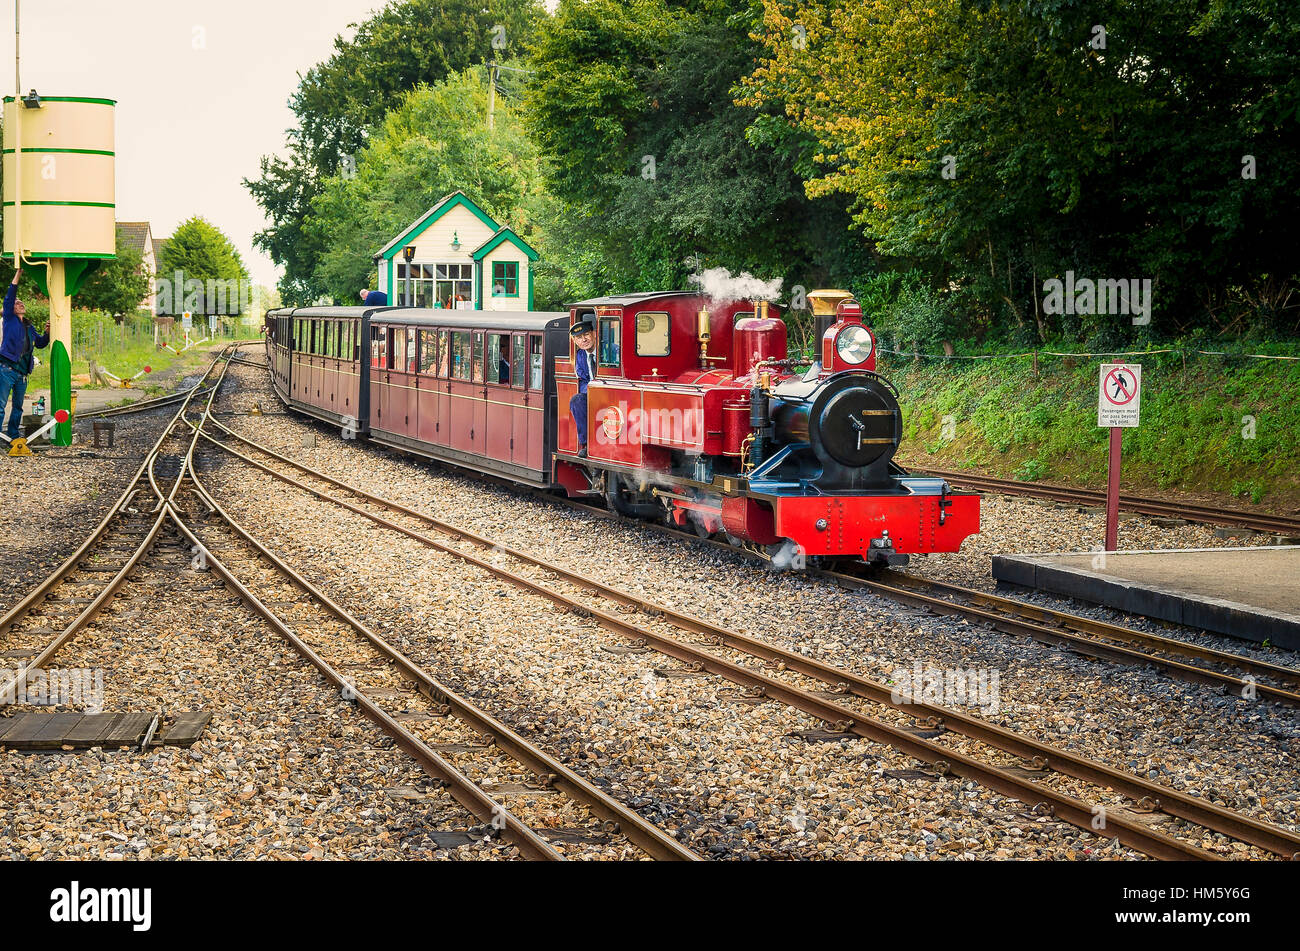 A passenger train arriving at Aylsham station on the Bure Valley Railway in Norfolk UK Stock Photo